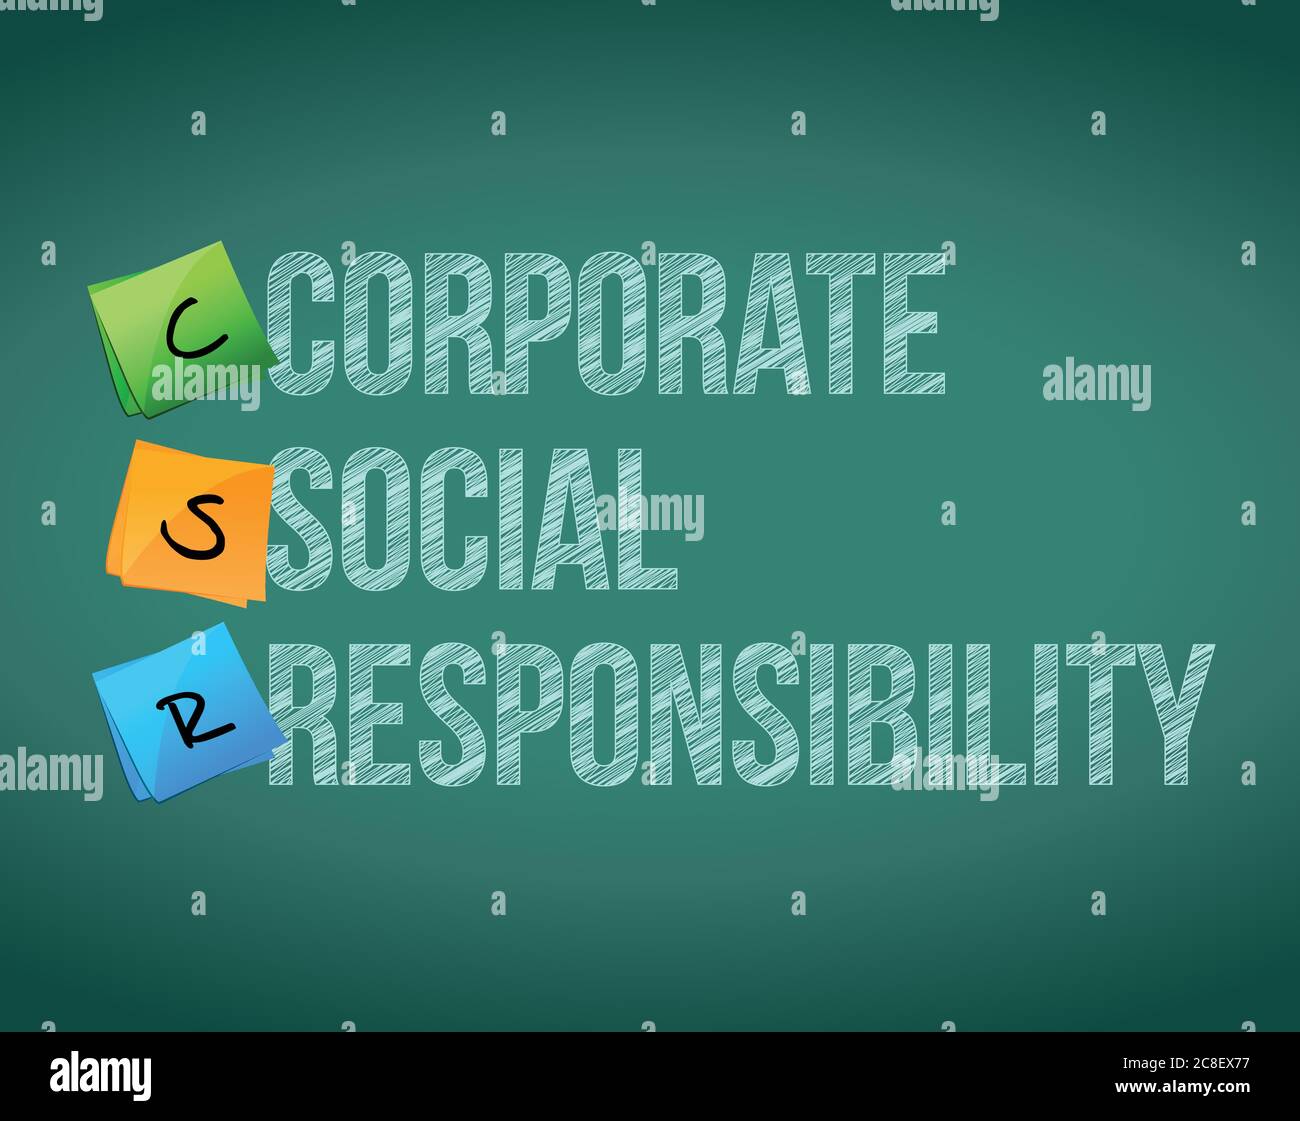 Corporate social responsibility board posts illustration design over chalkboard background Stock Vector